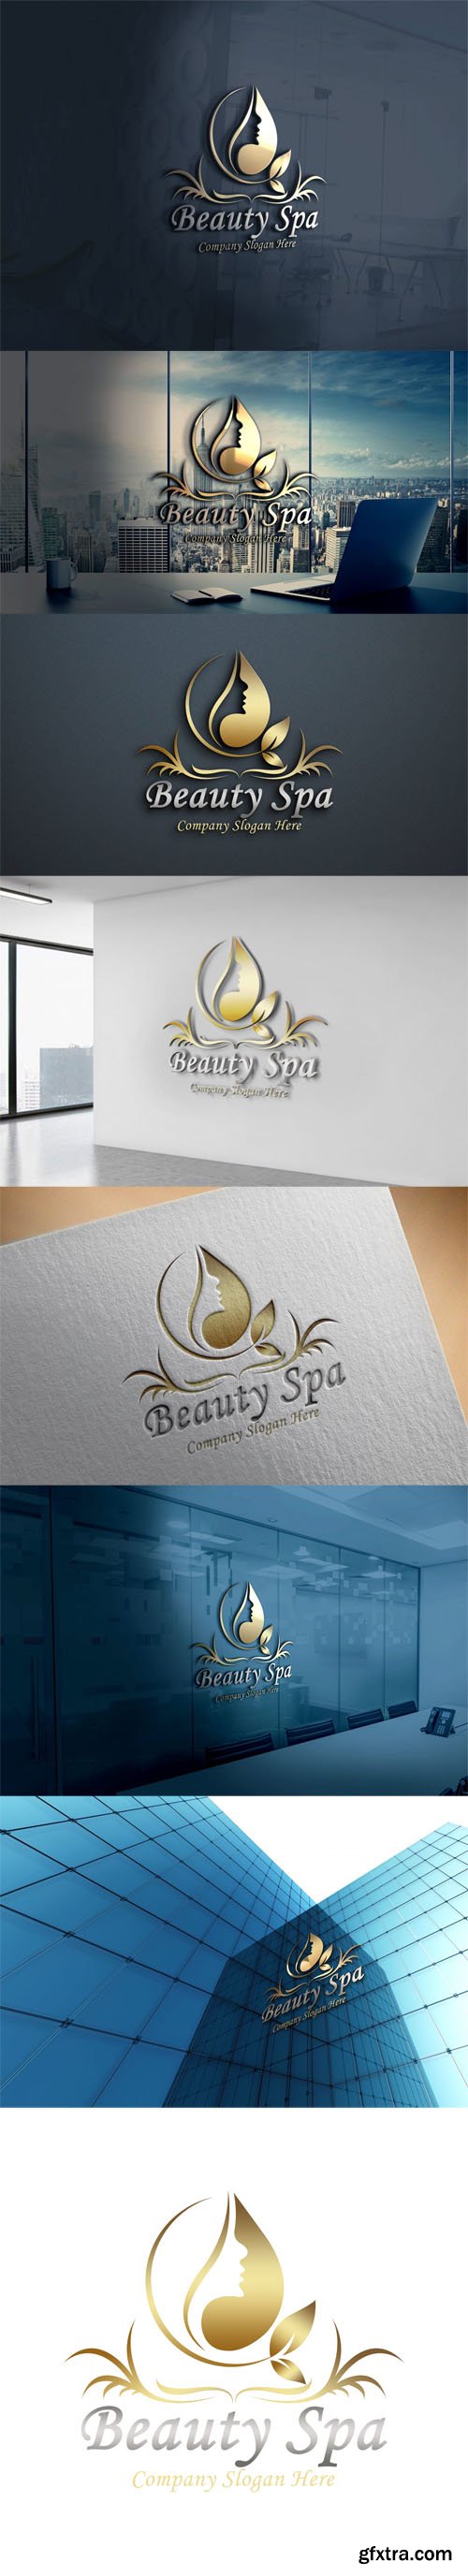 Beauty Spa Logo Design PSD Template